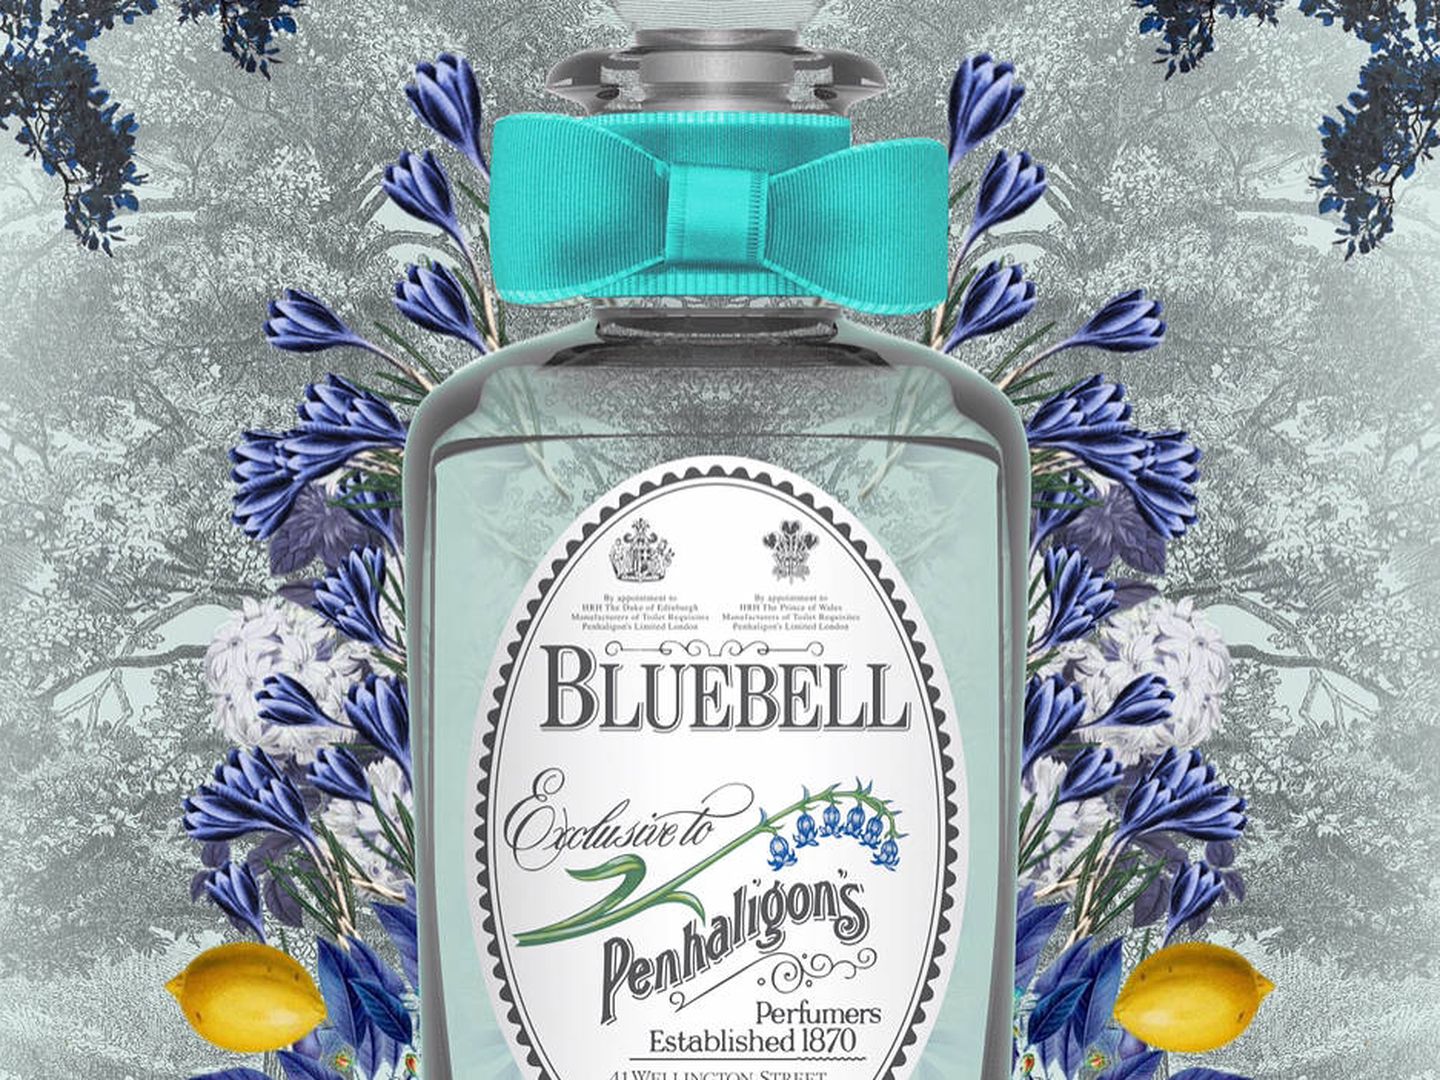 El perfume Bluebell.